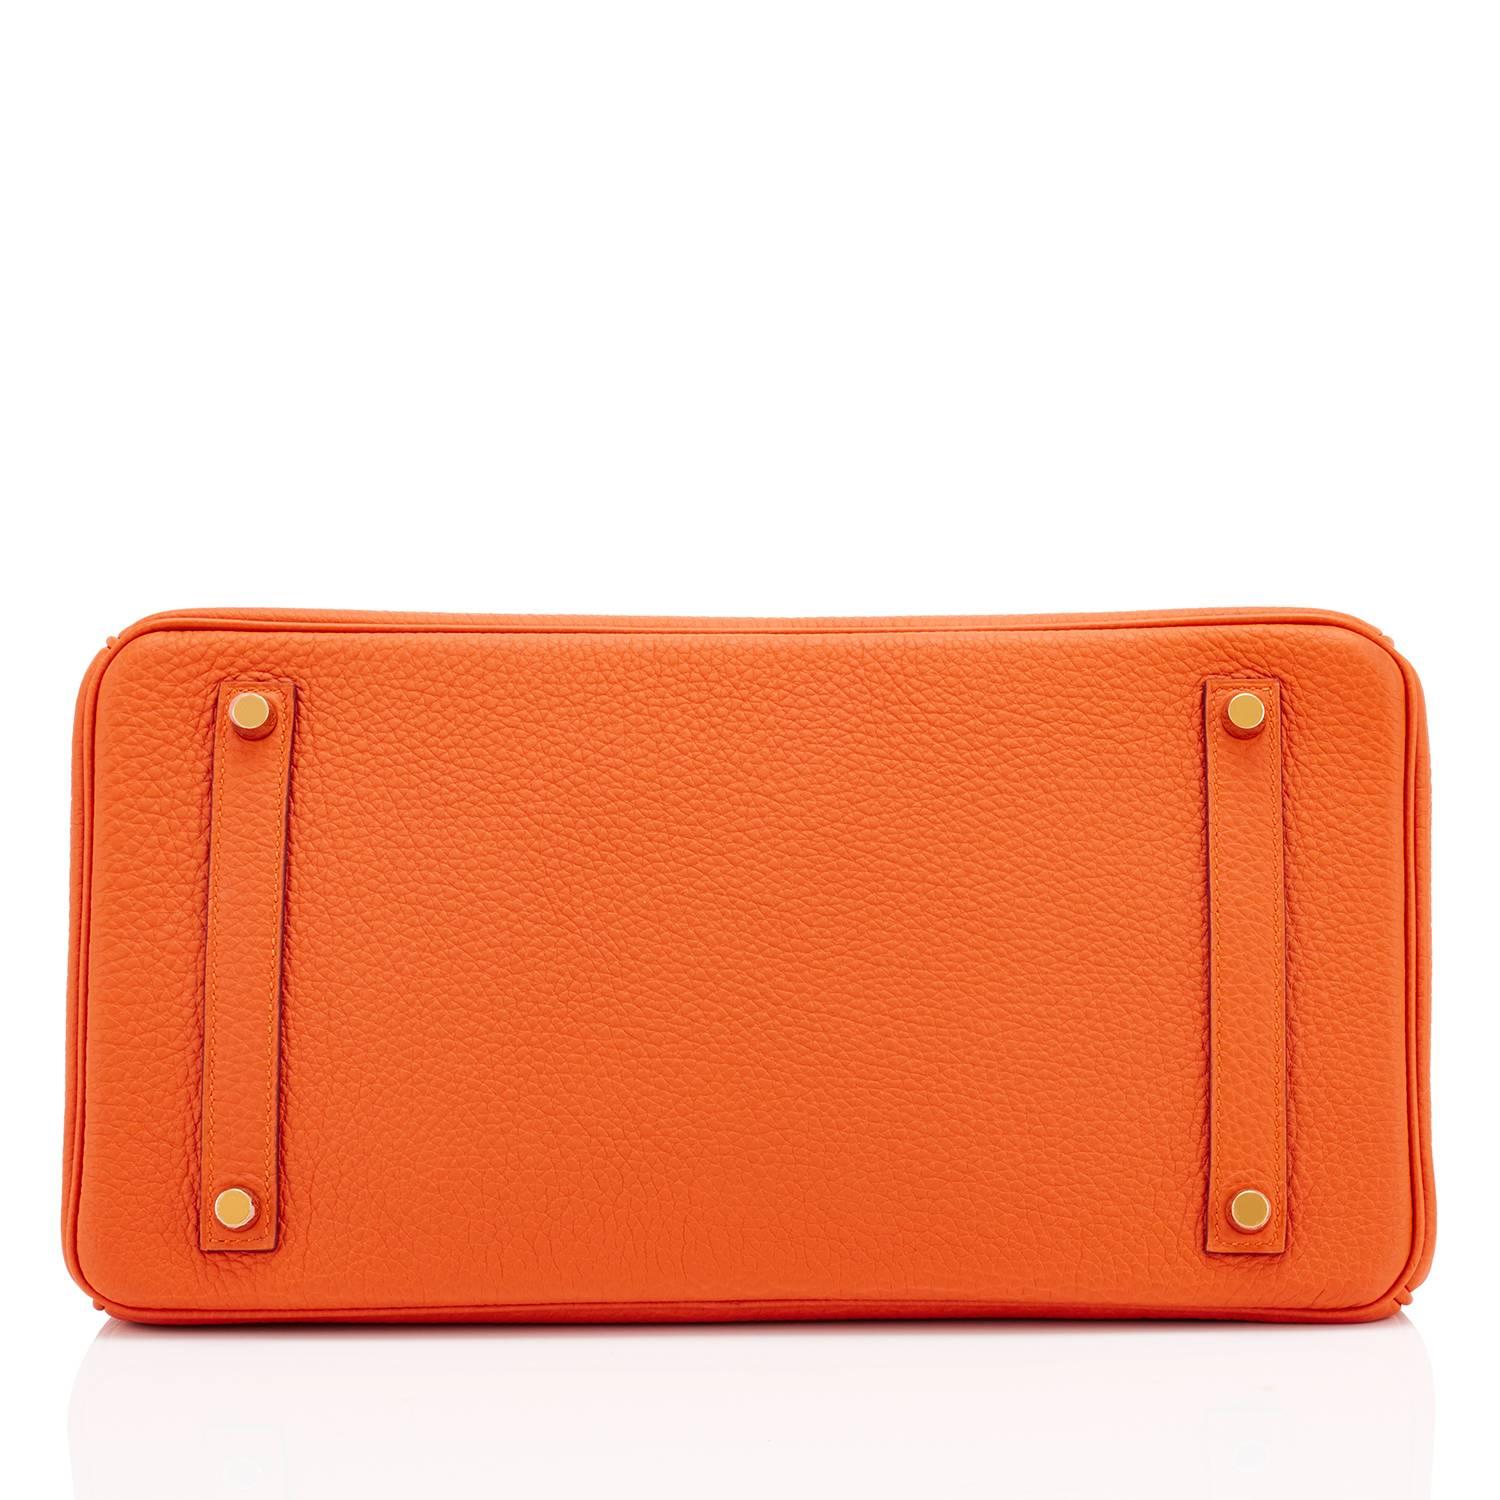 Hermes Classic Orange Togo 35cm Birkin Bag Gold Hardware Very Rare 1